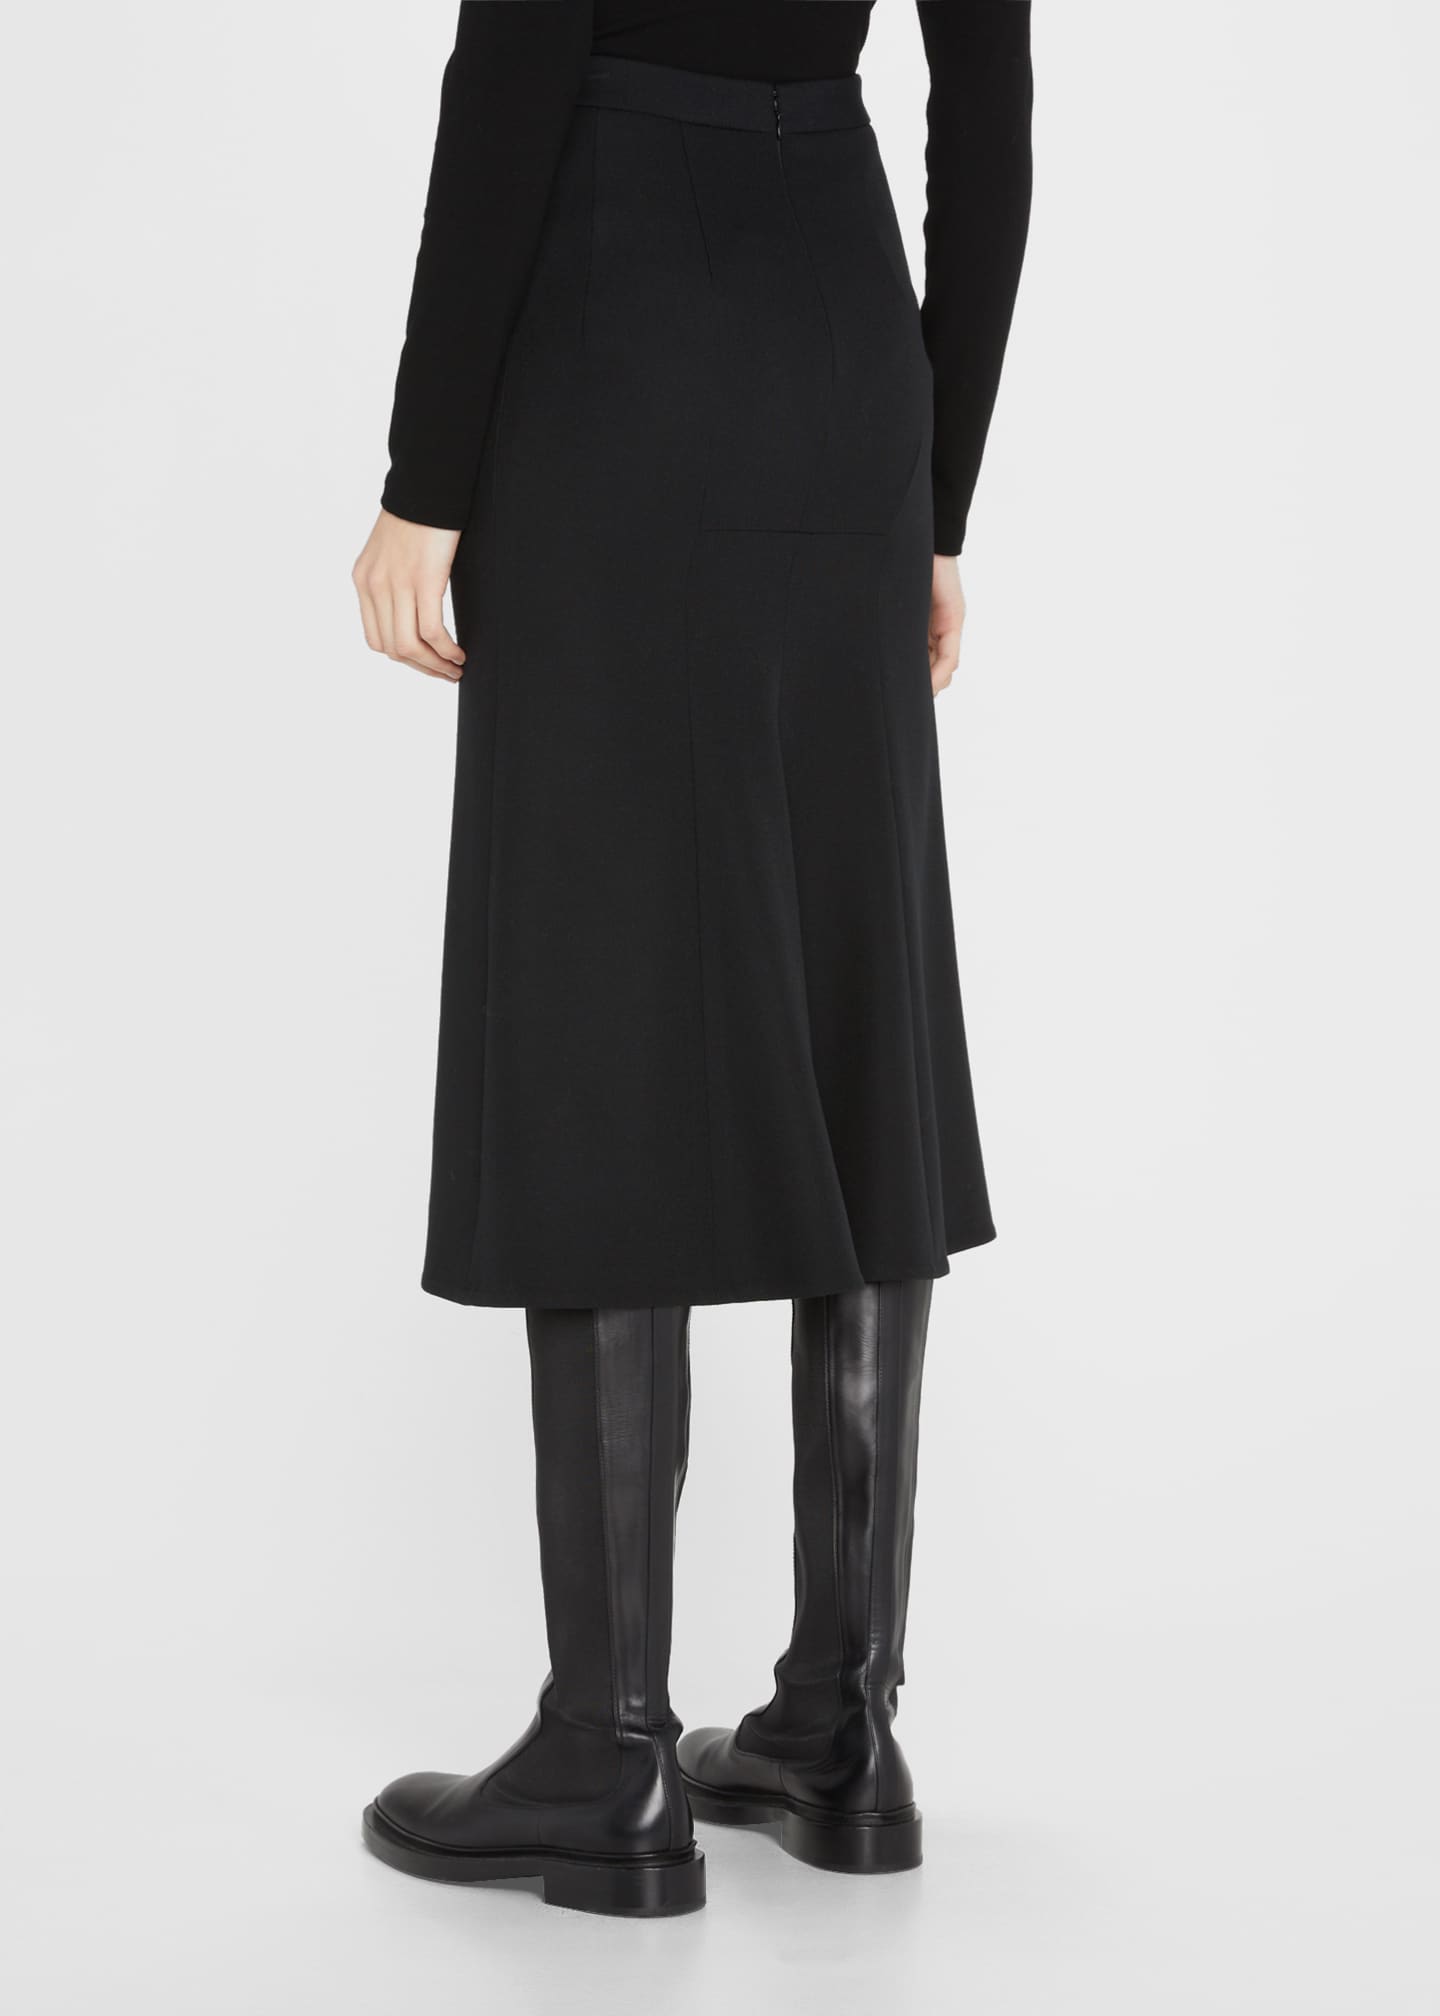 Balenciaga Pushup Wool Barathea Midi Skirt - Bergdorf Goodman